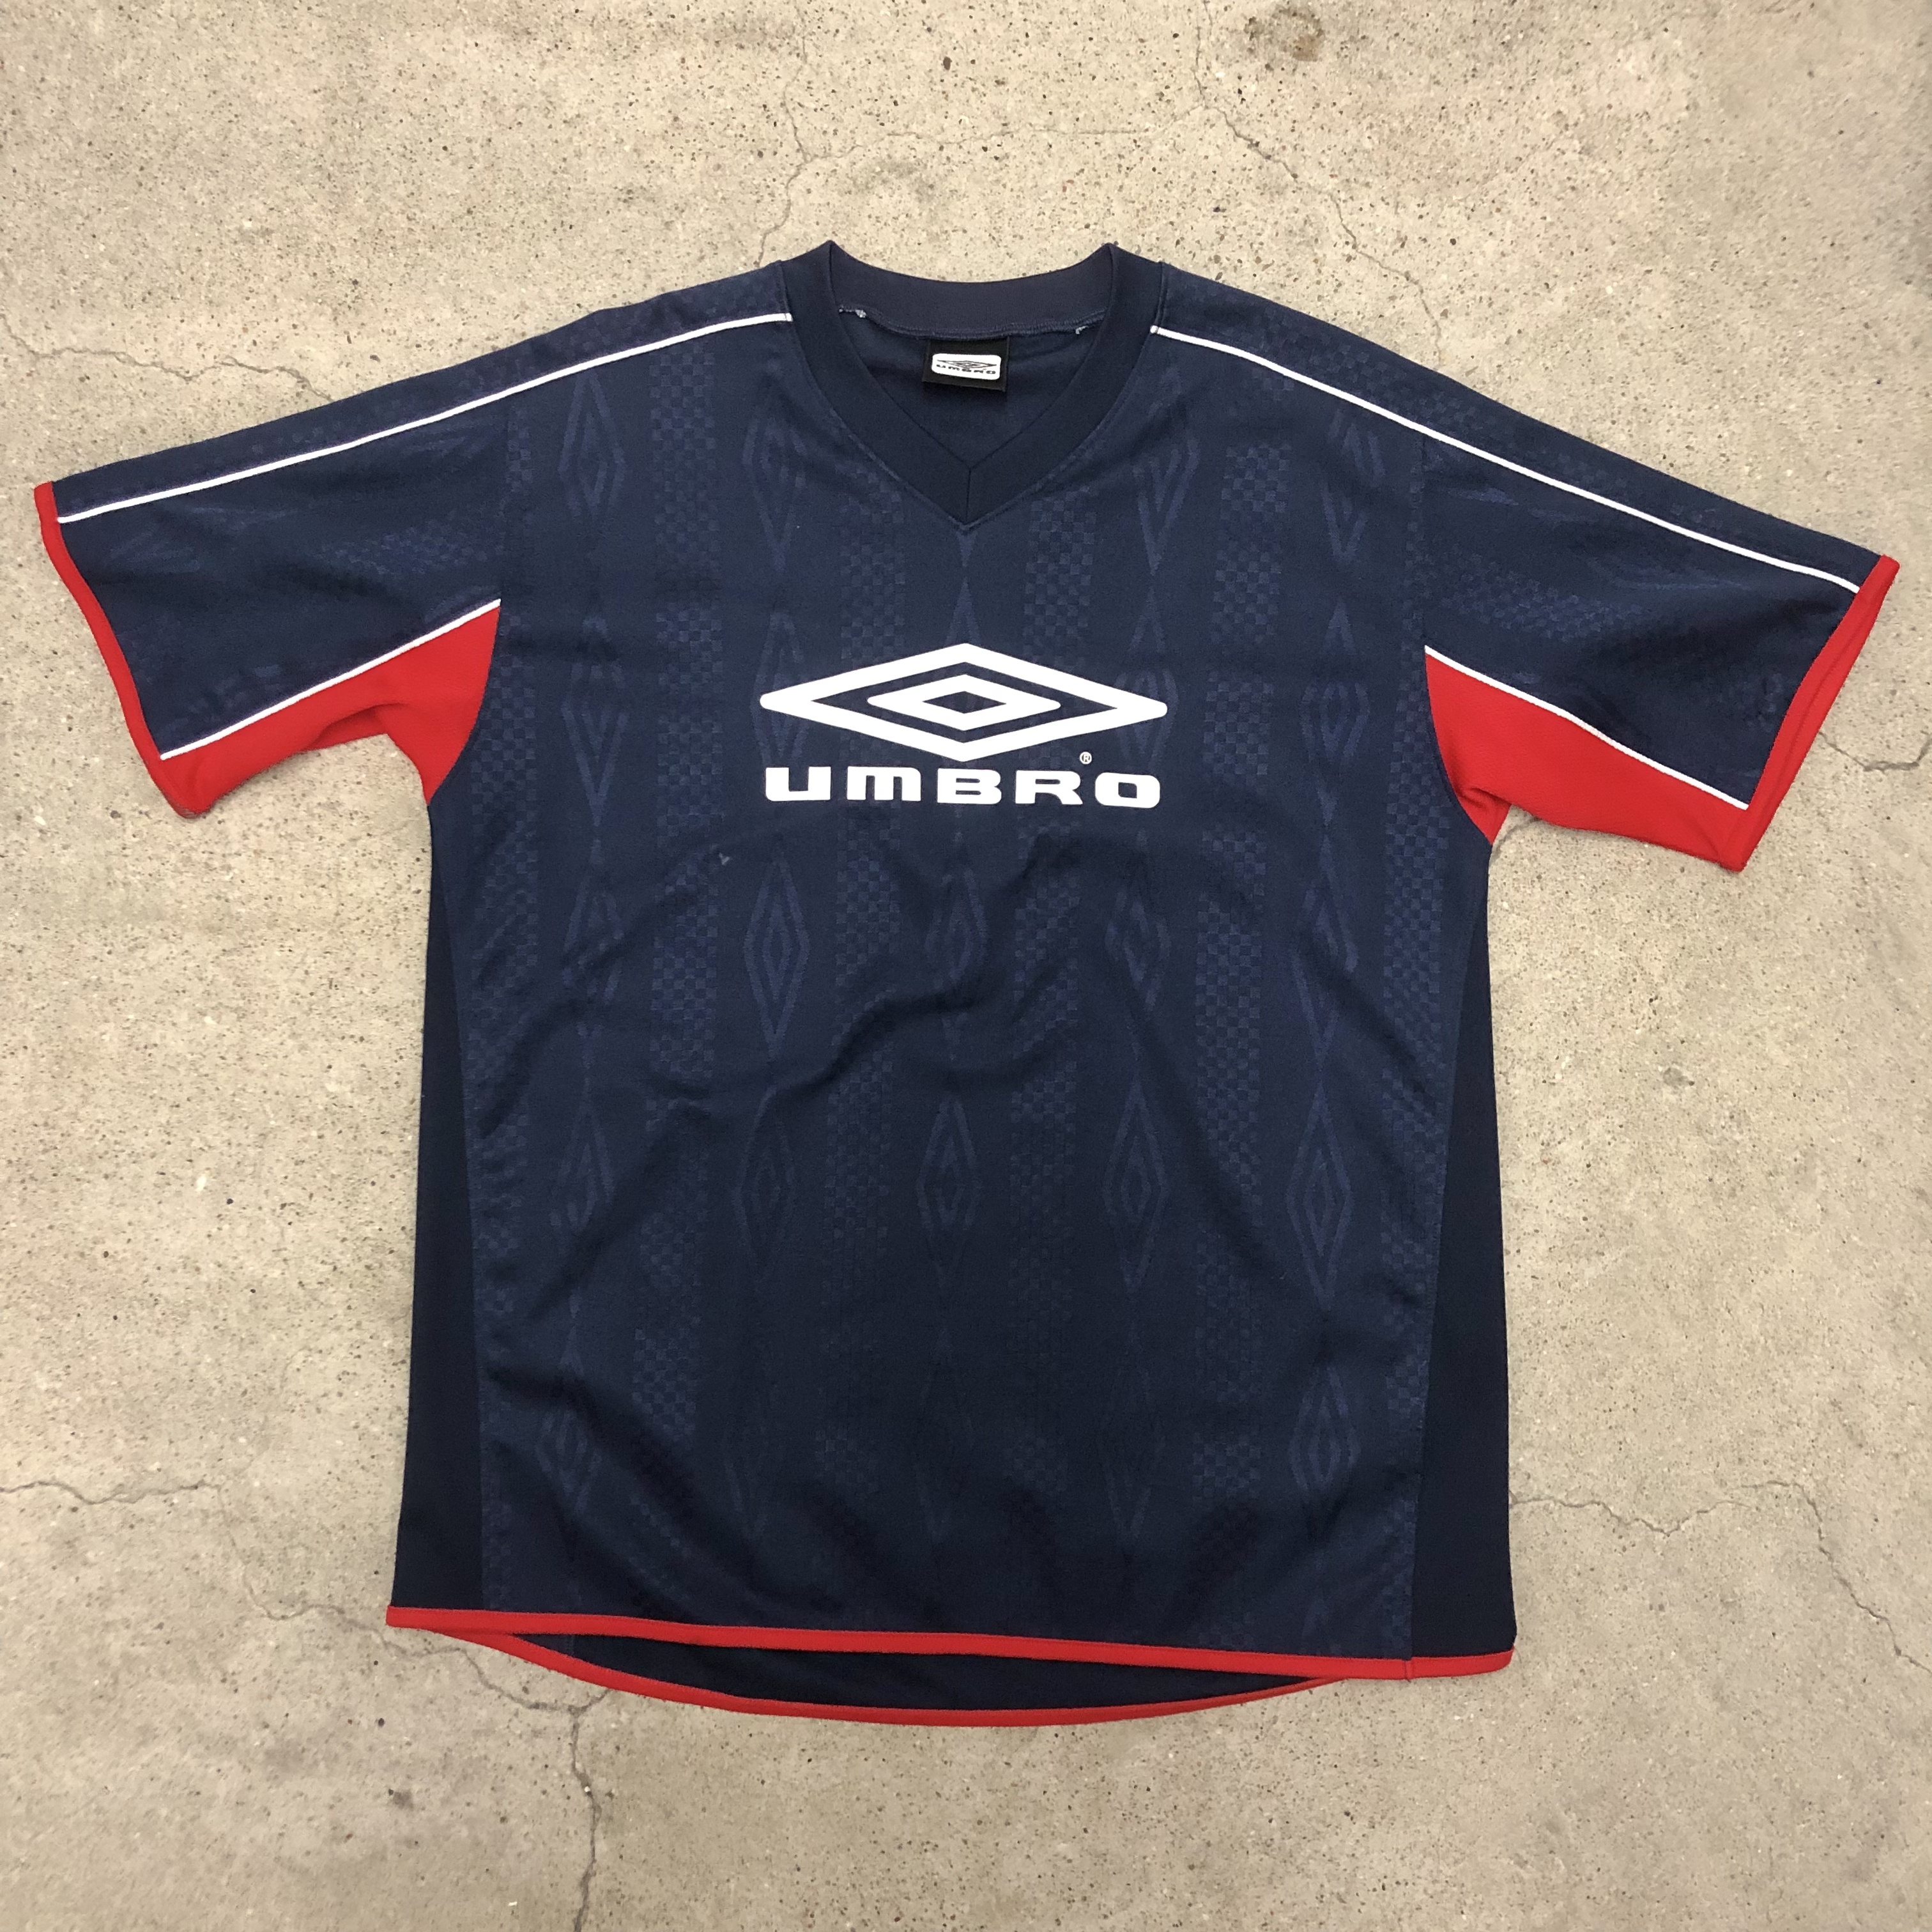 00s UMBROGame shirtM-Lゲームシャツエンブレムネイビーデサント社製T